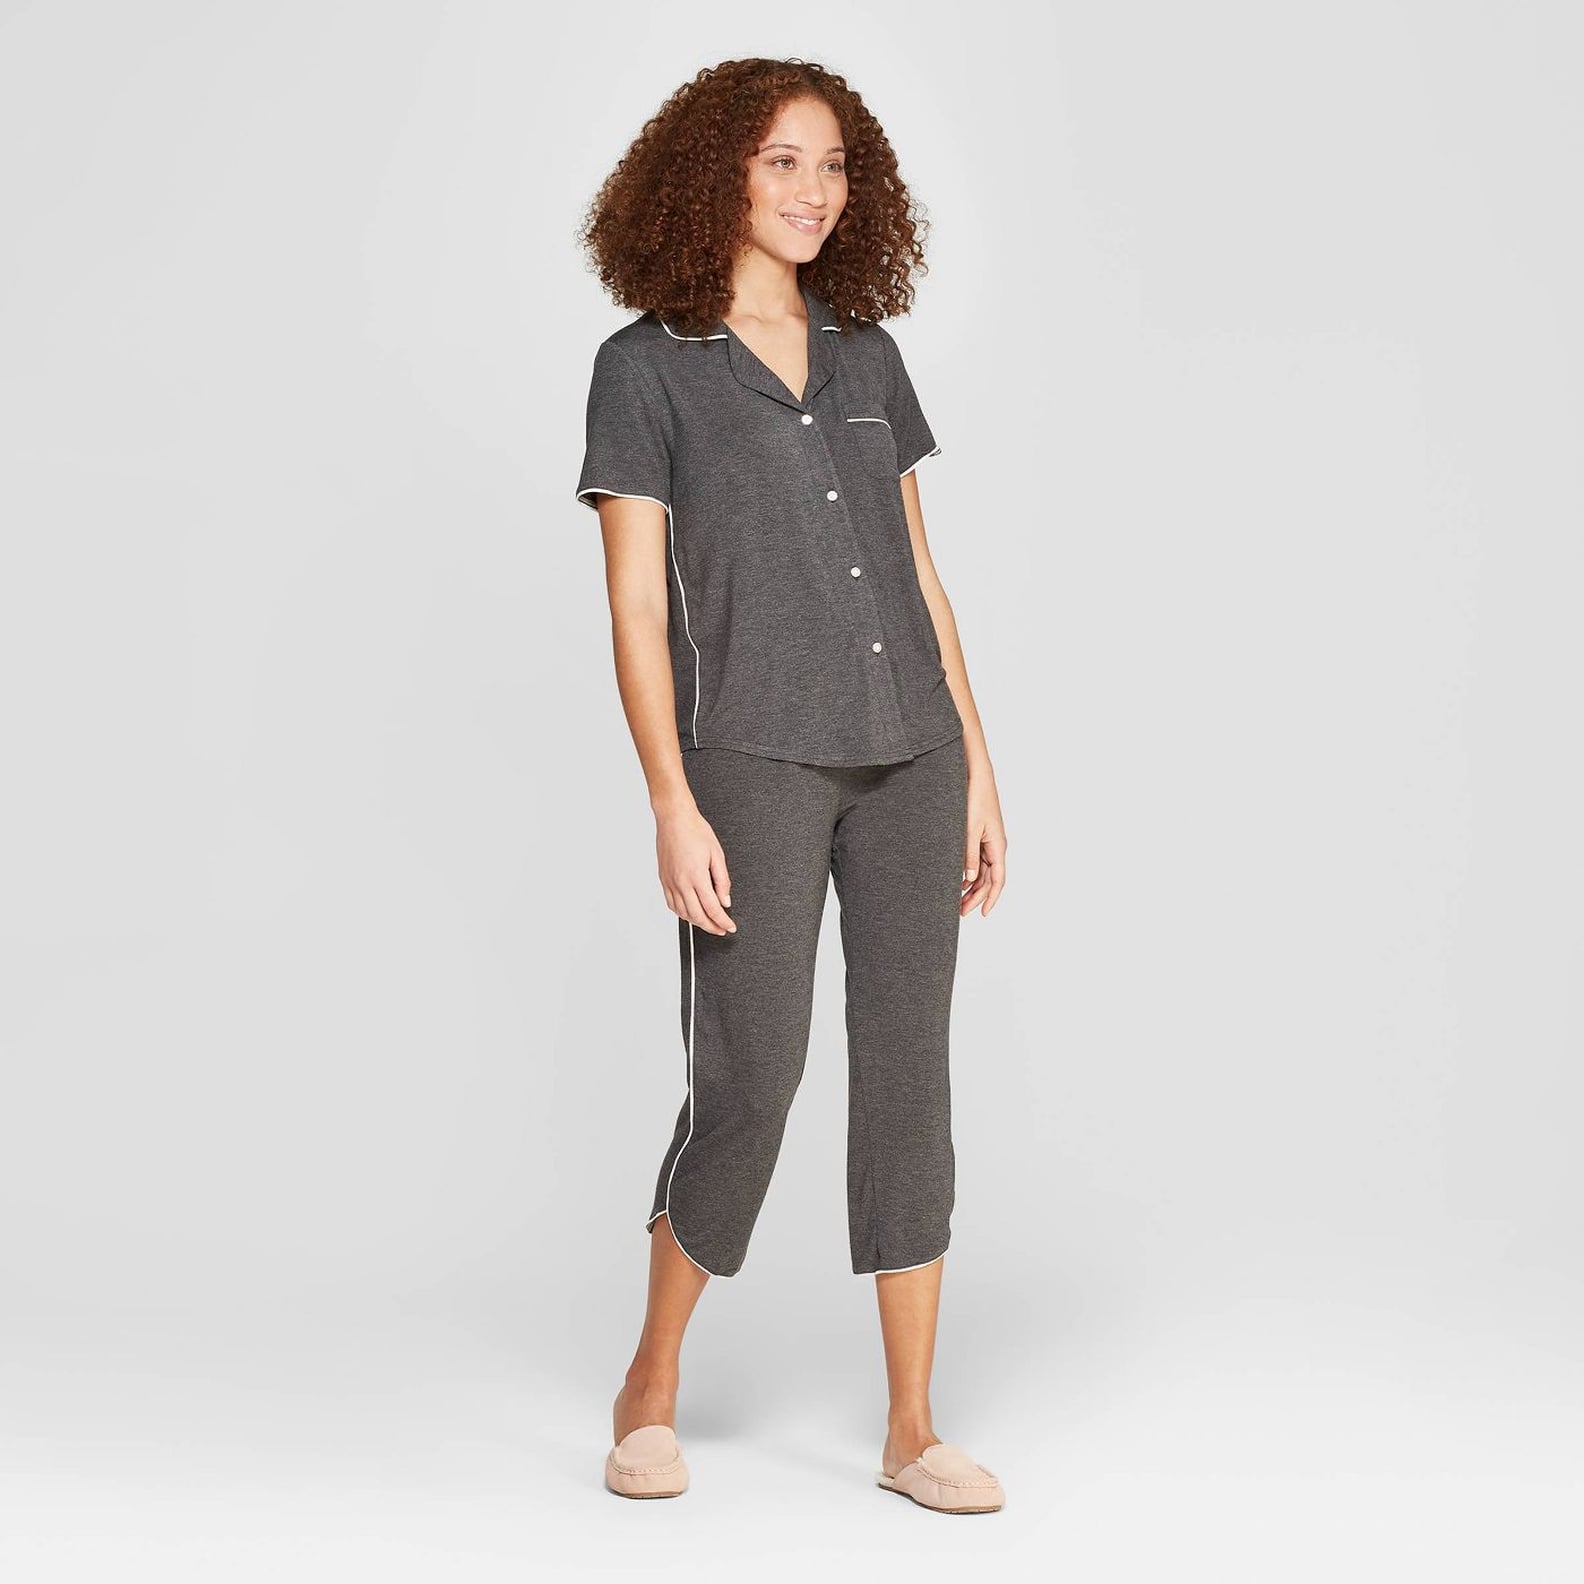 Soft Pajama Short Set From Target | Editor Review | POPSUGAR Fashion